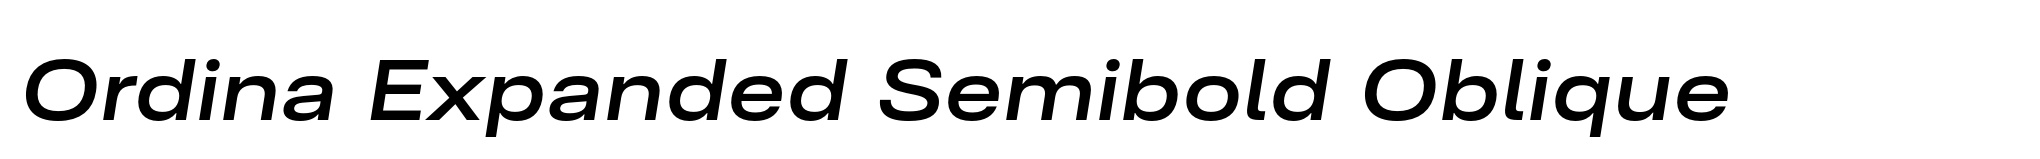 Ordina Expanded Semibold Oblique image